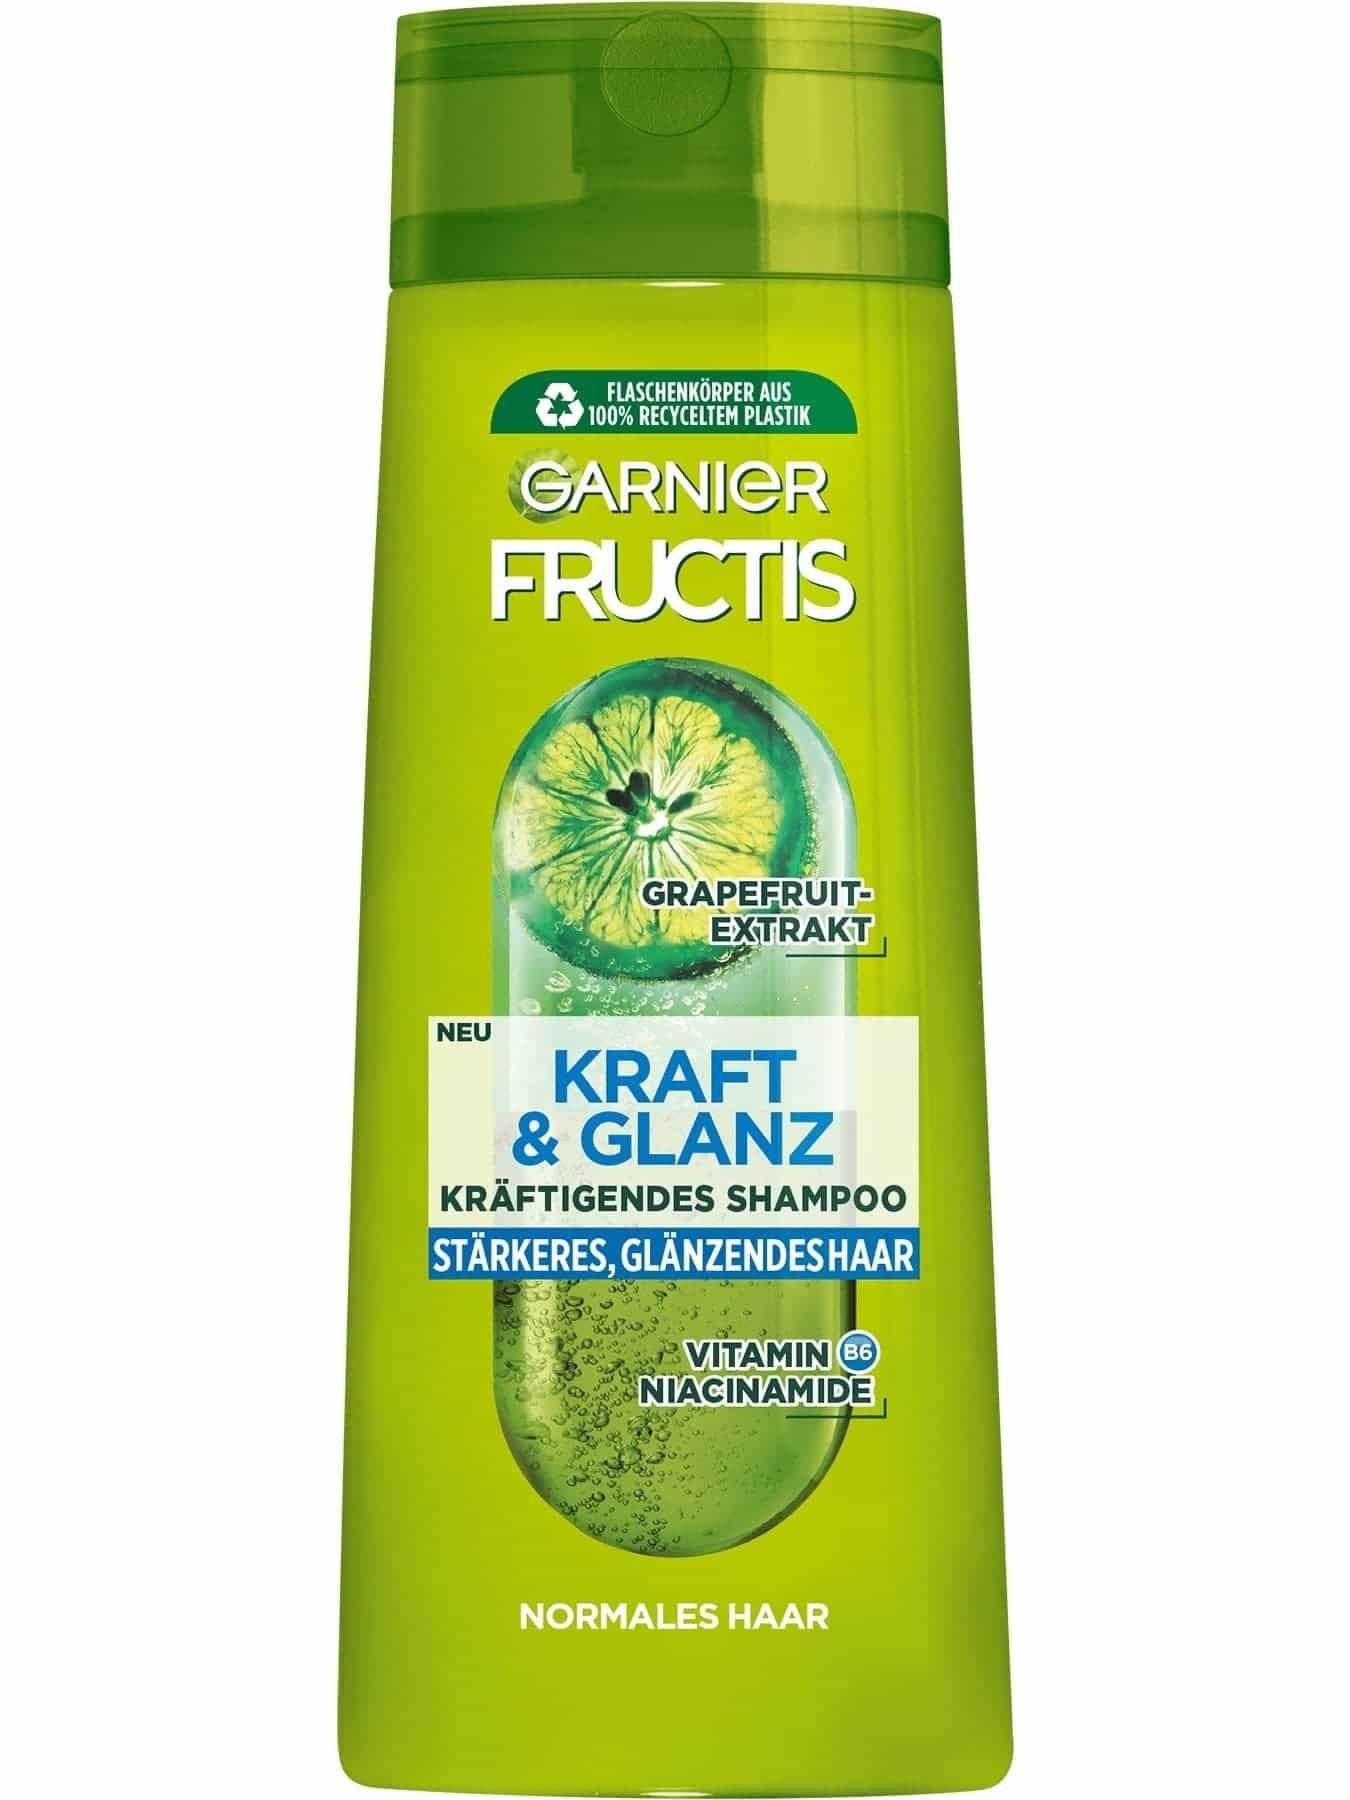 Fructis Kraft & Glanz Shampoo Produktbild